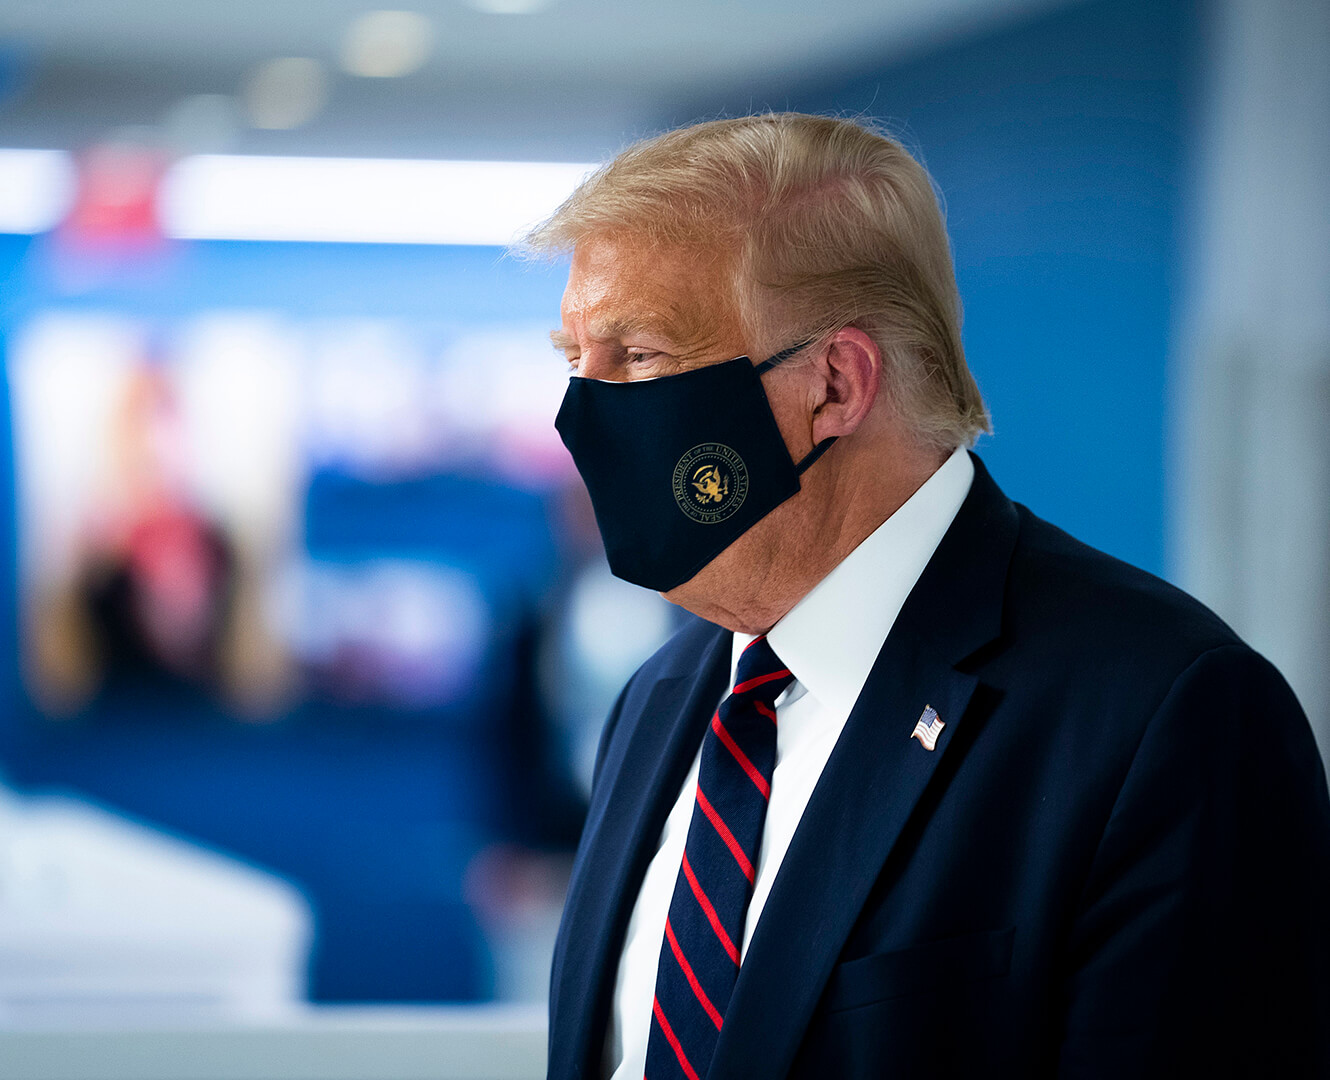 President Trump wearing a mask